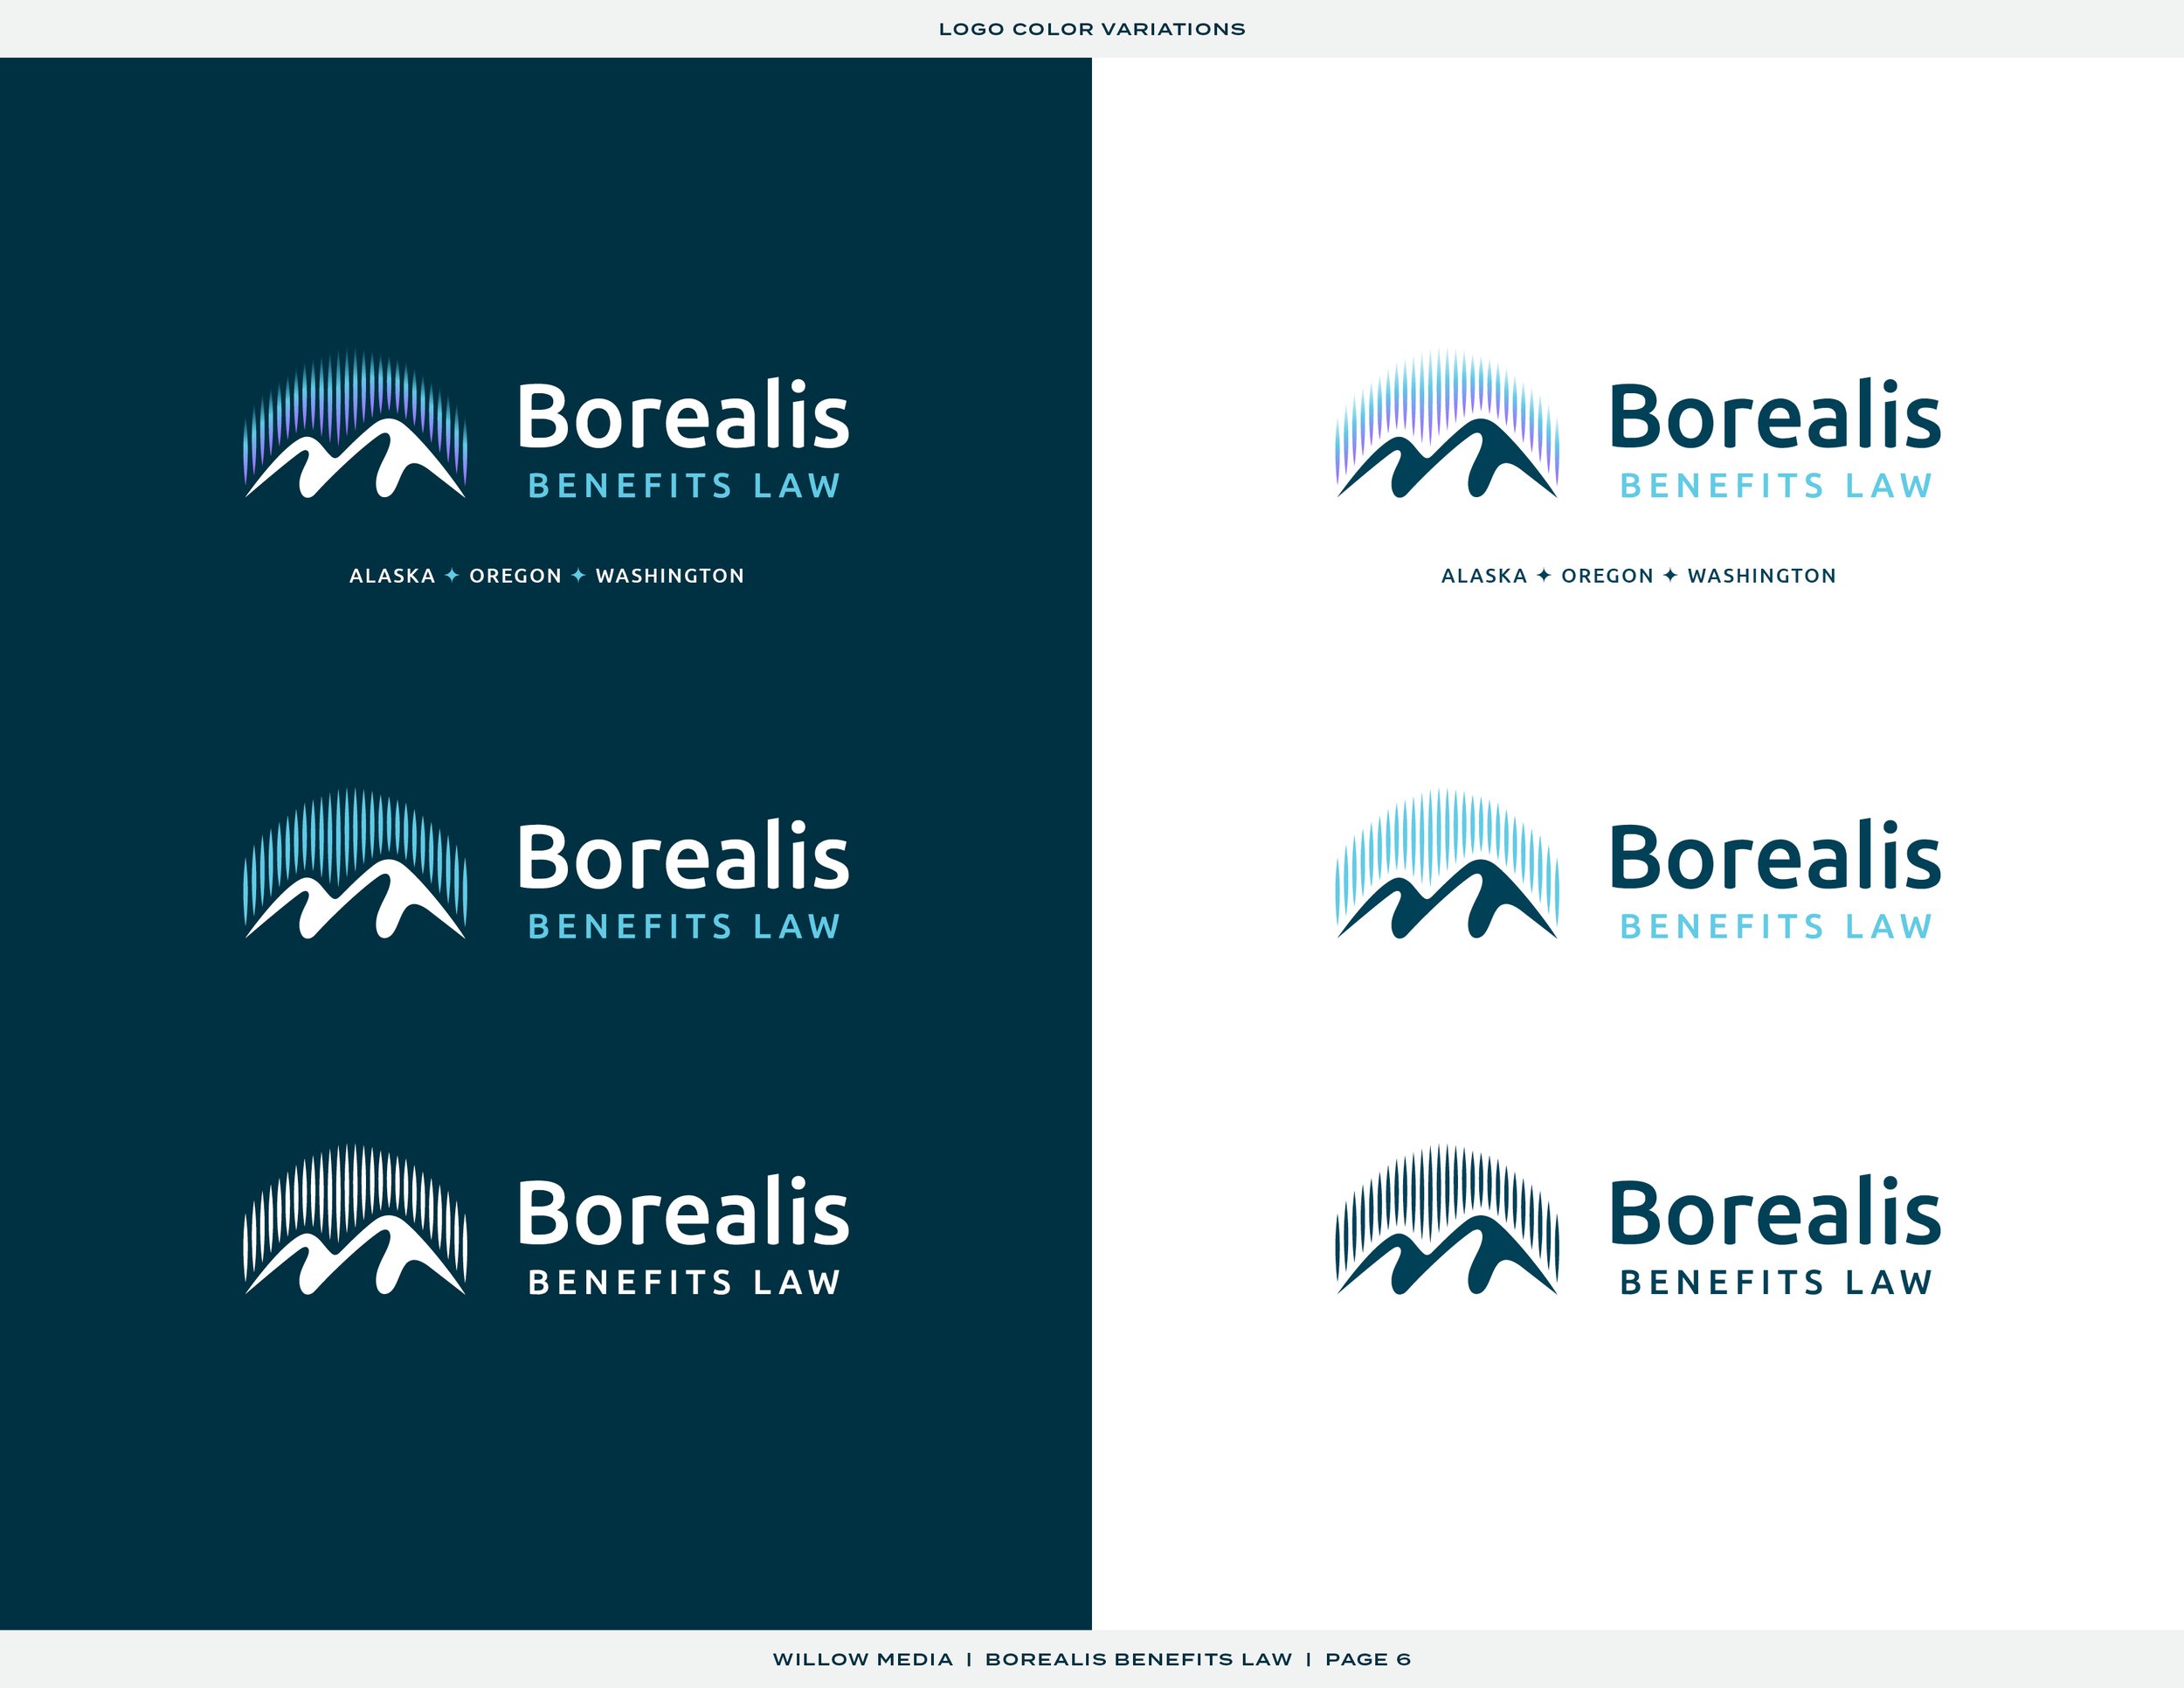 Borealis Benefits Law Brand Presentation | Willow Media6.jpg